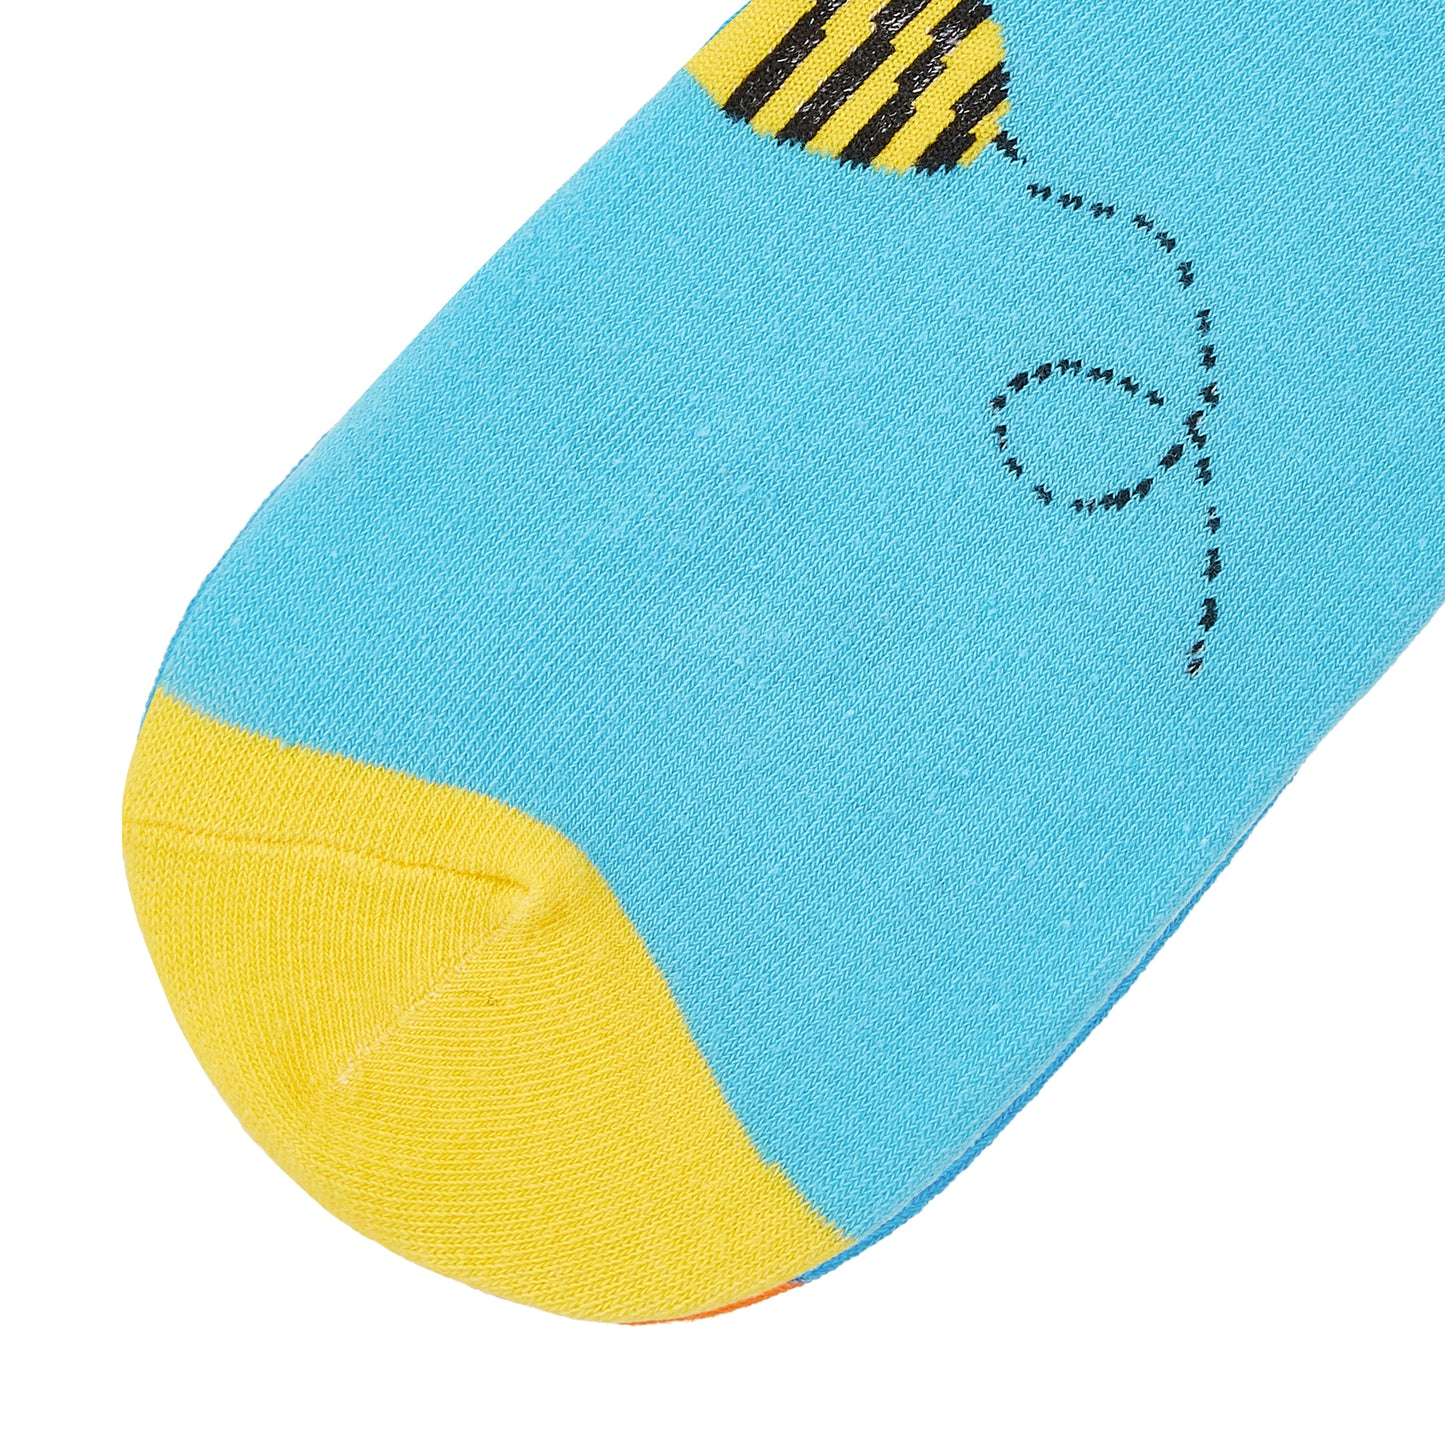 Busy Bee Printed Mid-Calf Length Socks - IDENTITY Apparel Shop